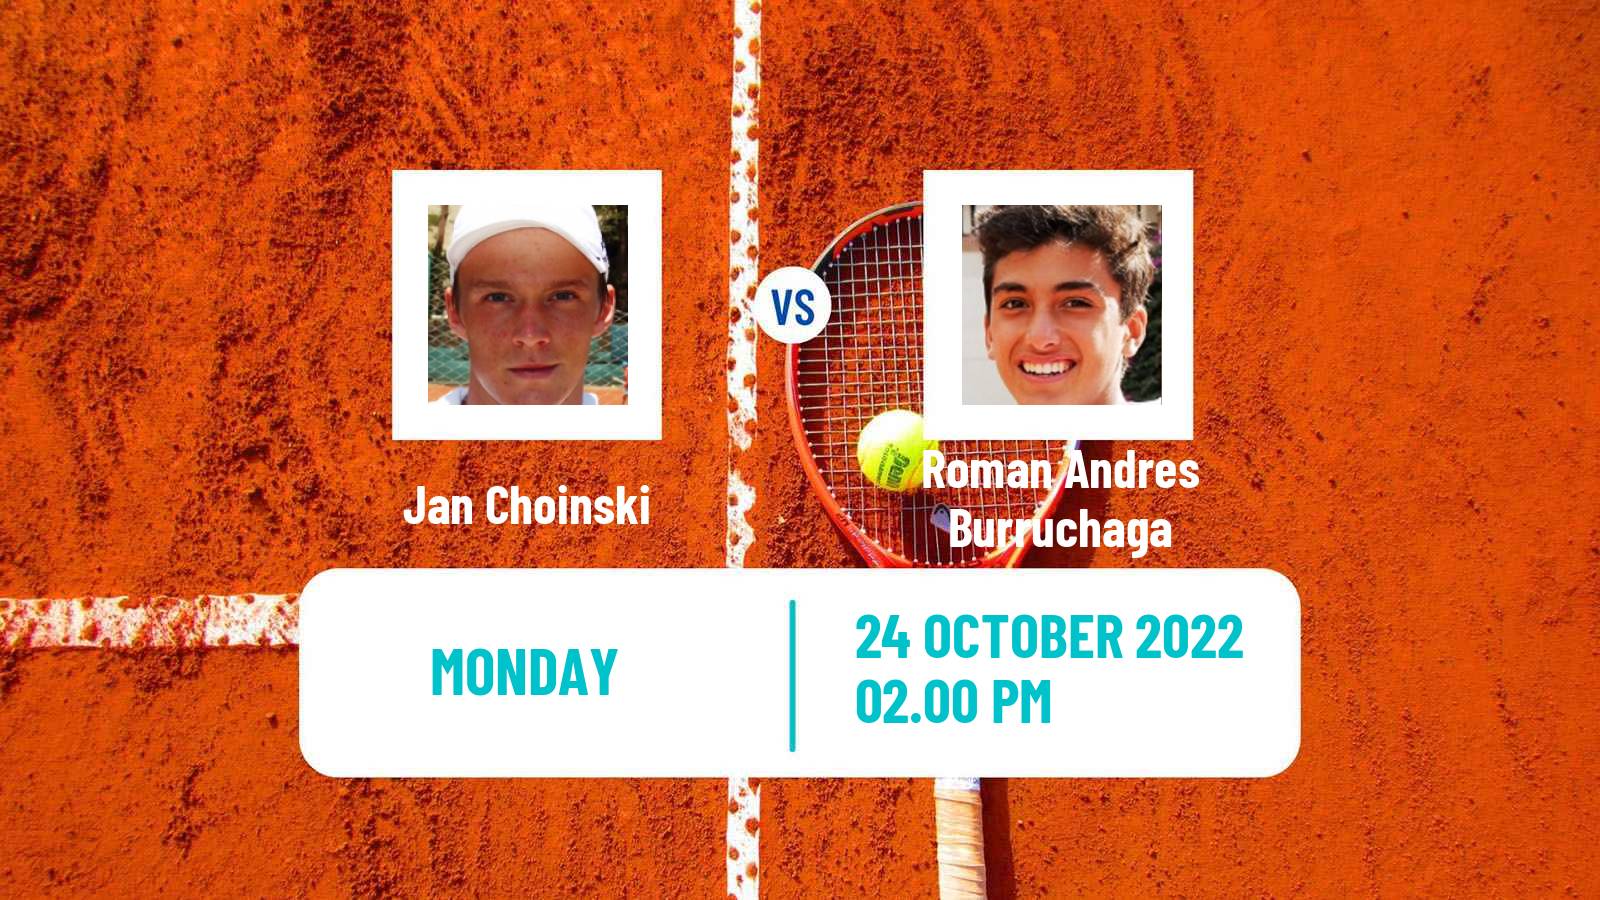 Tennis ATP Challenger Jan Choinski - Roman Andres Burruchaga